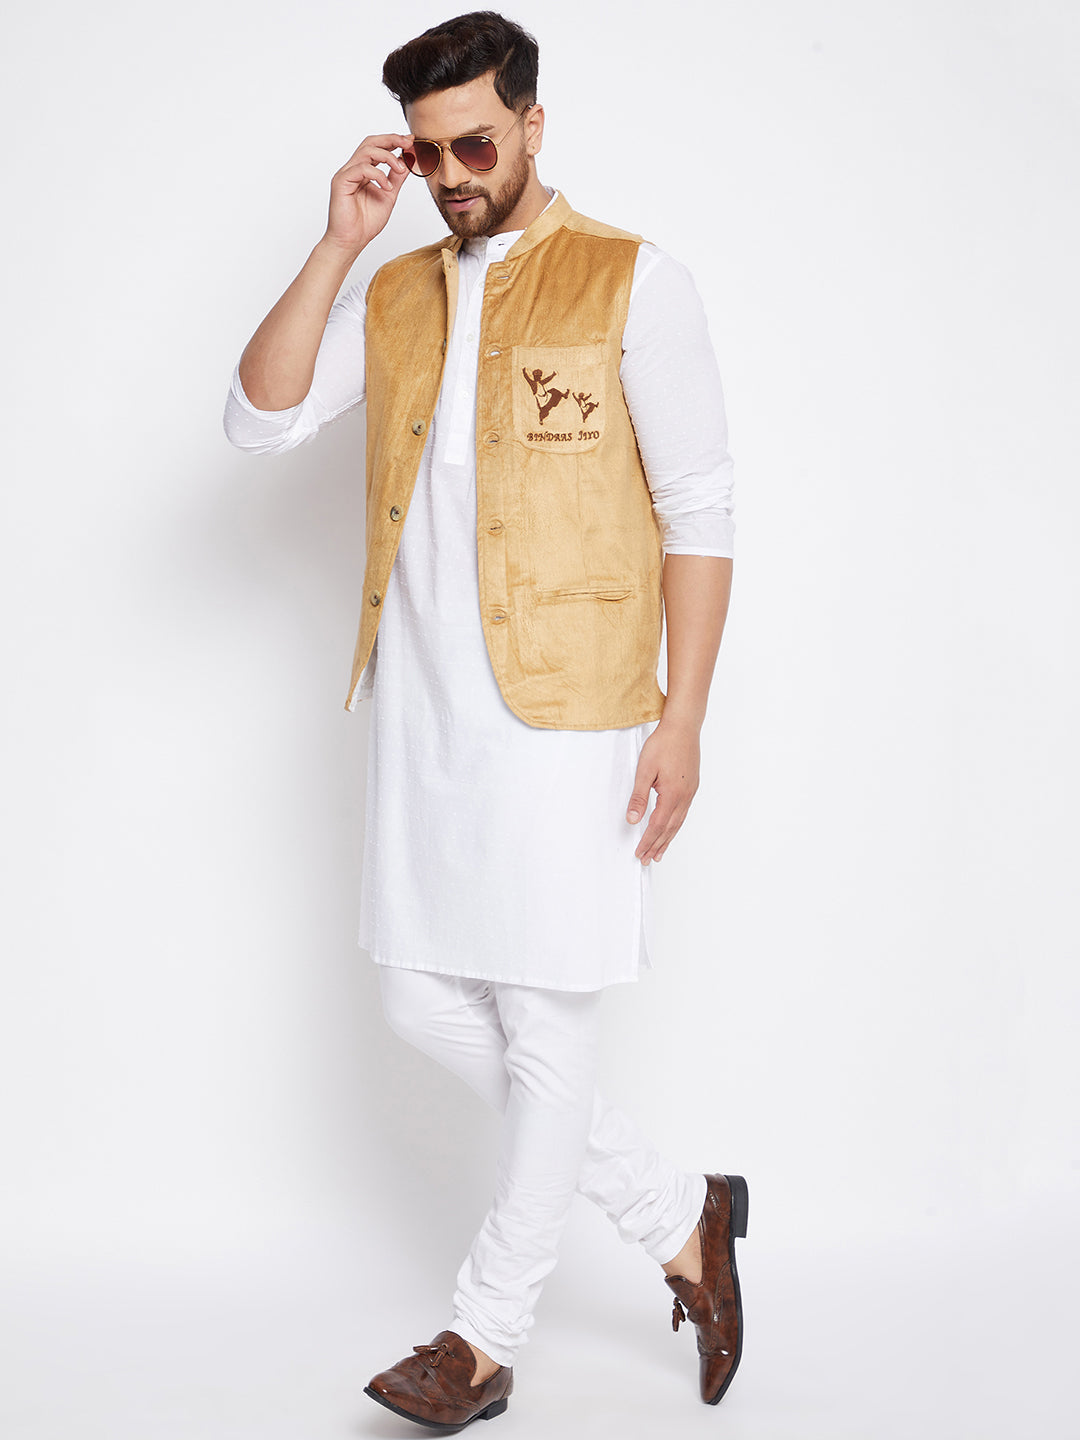 Men's Bindaas Jiyo Woven Design Jacket - Even Apparels